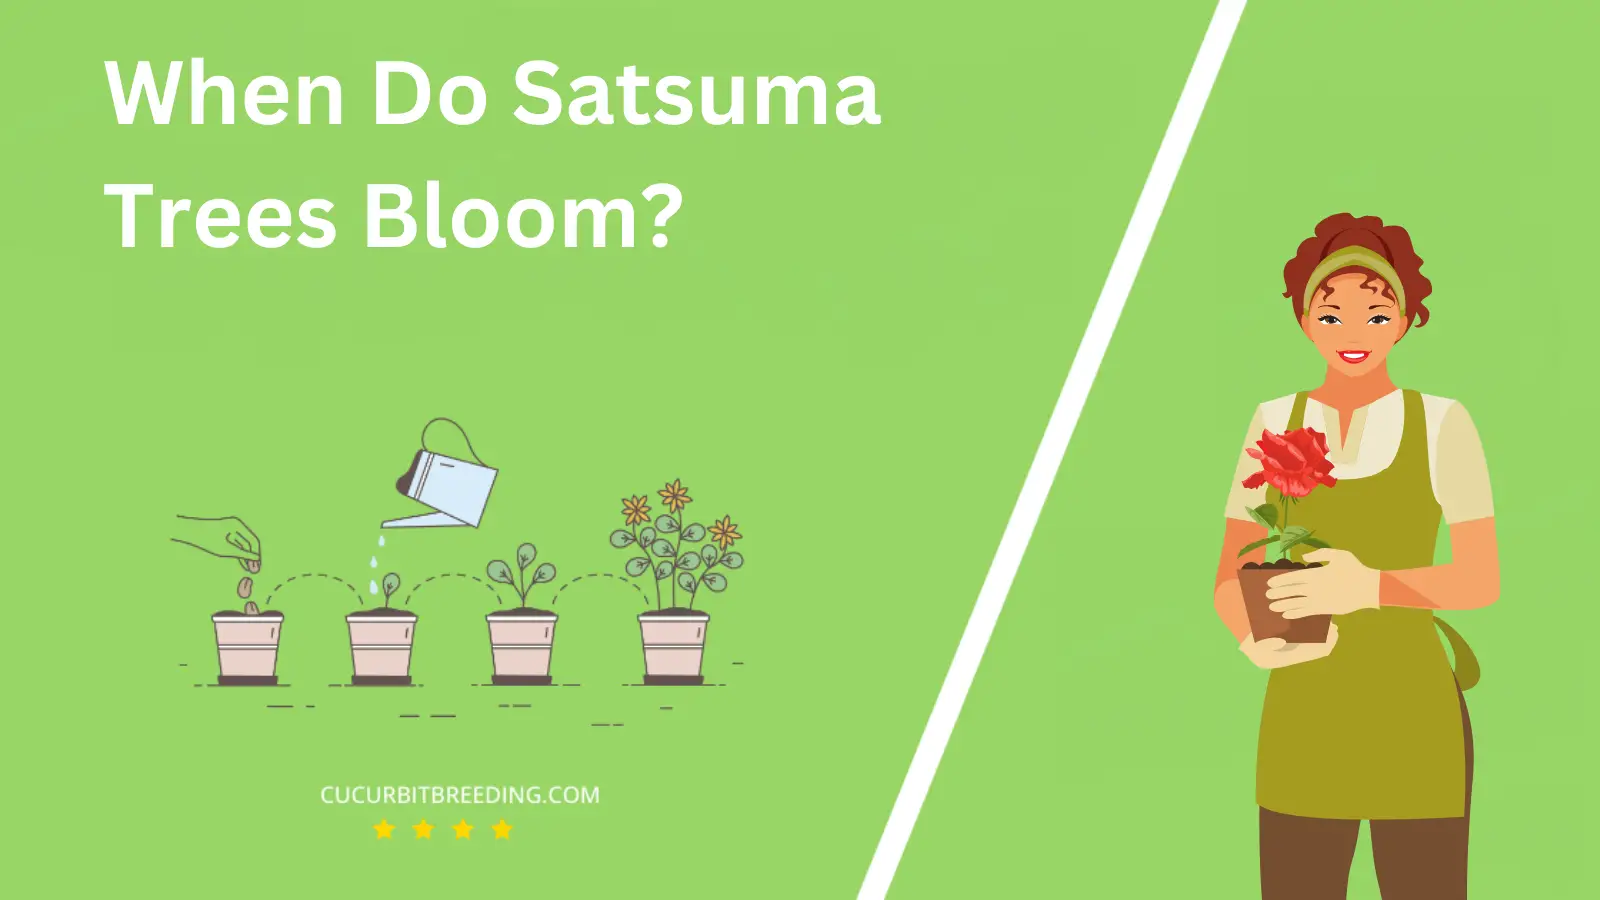 When Do Satsuma Trees Bloom?